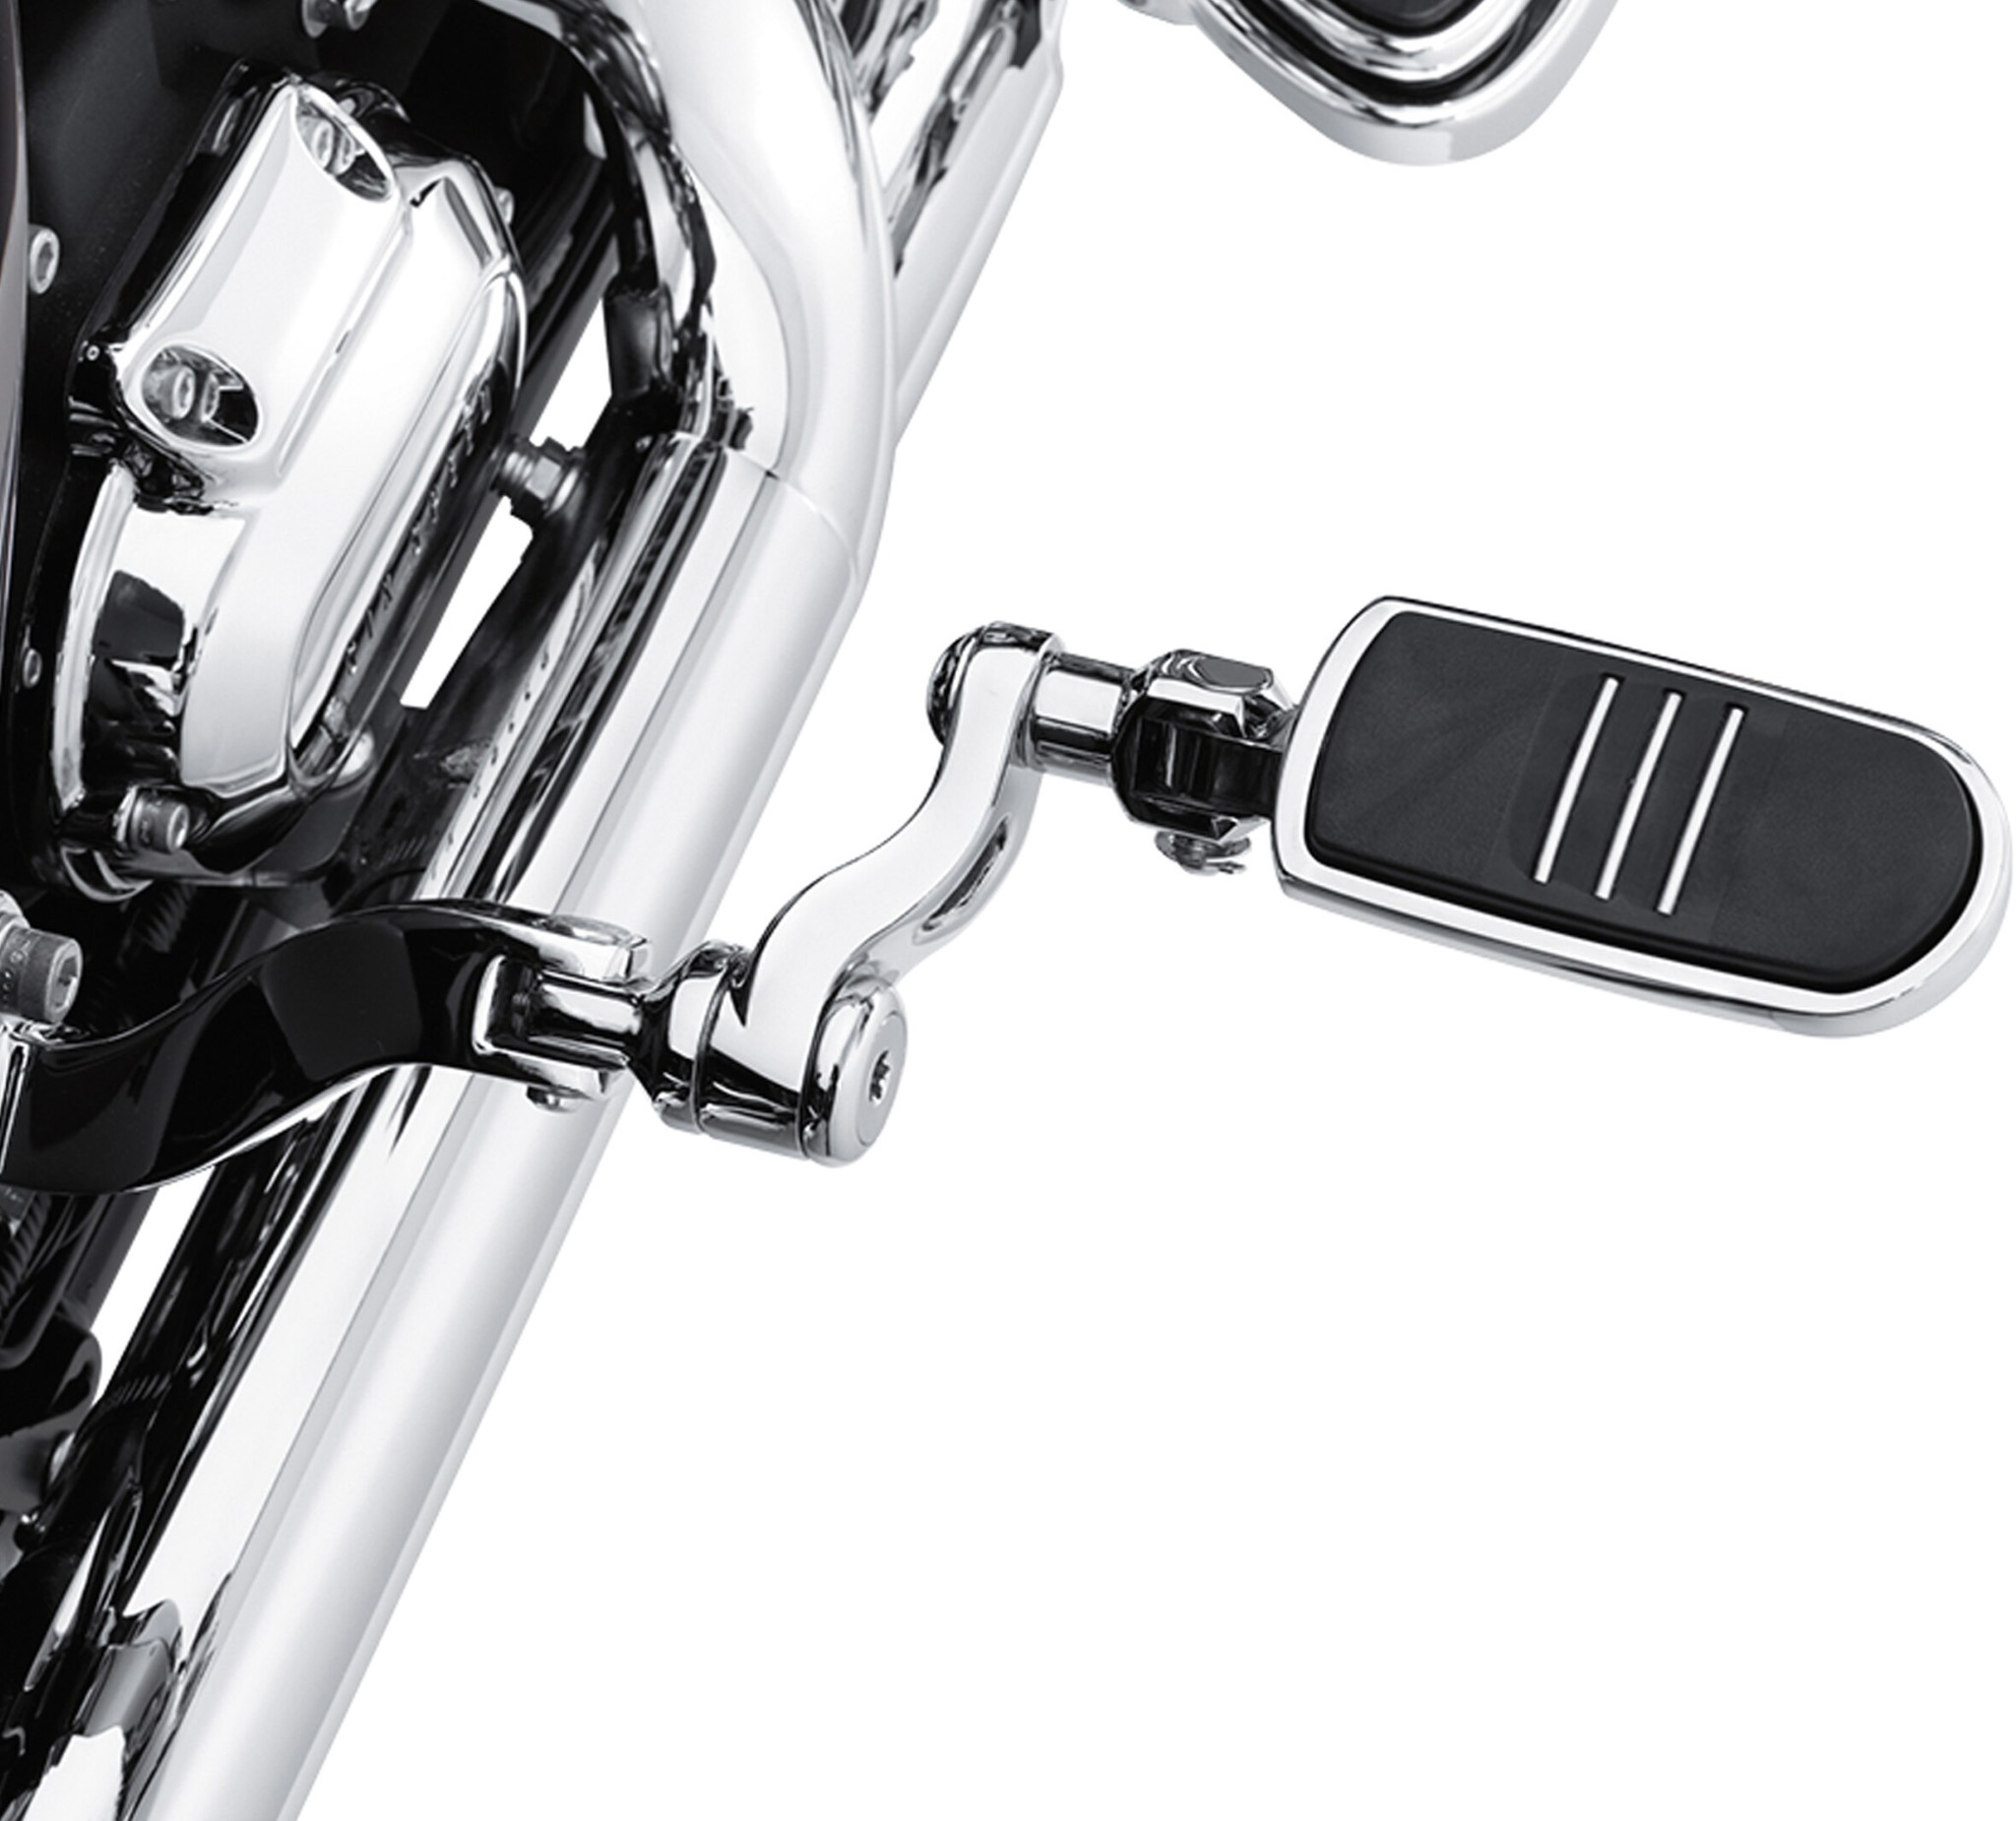 Adjustable Passenger Footpeg Mount Kit 50763-09 | Harley-Davidson USA